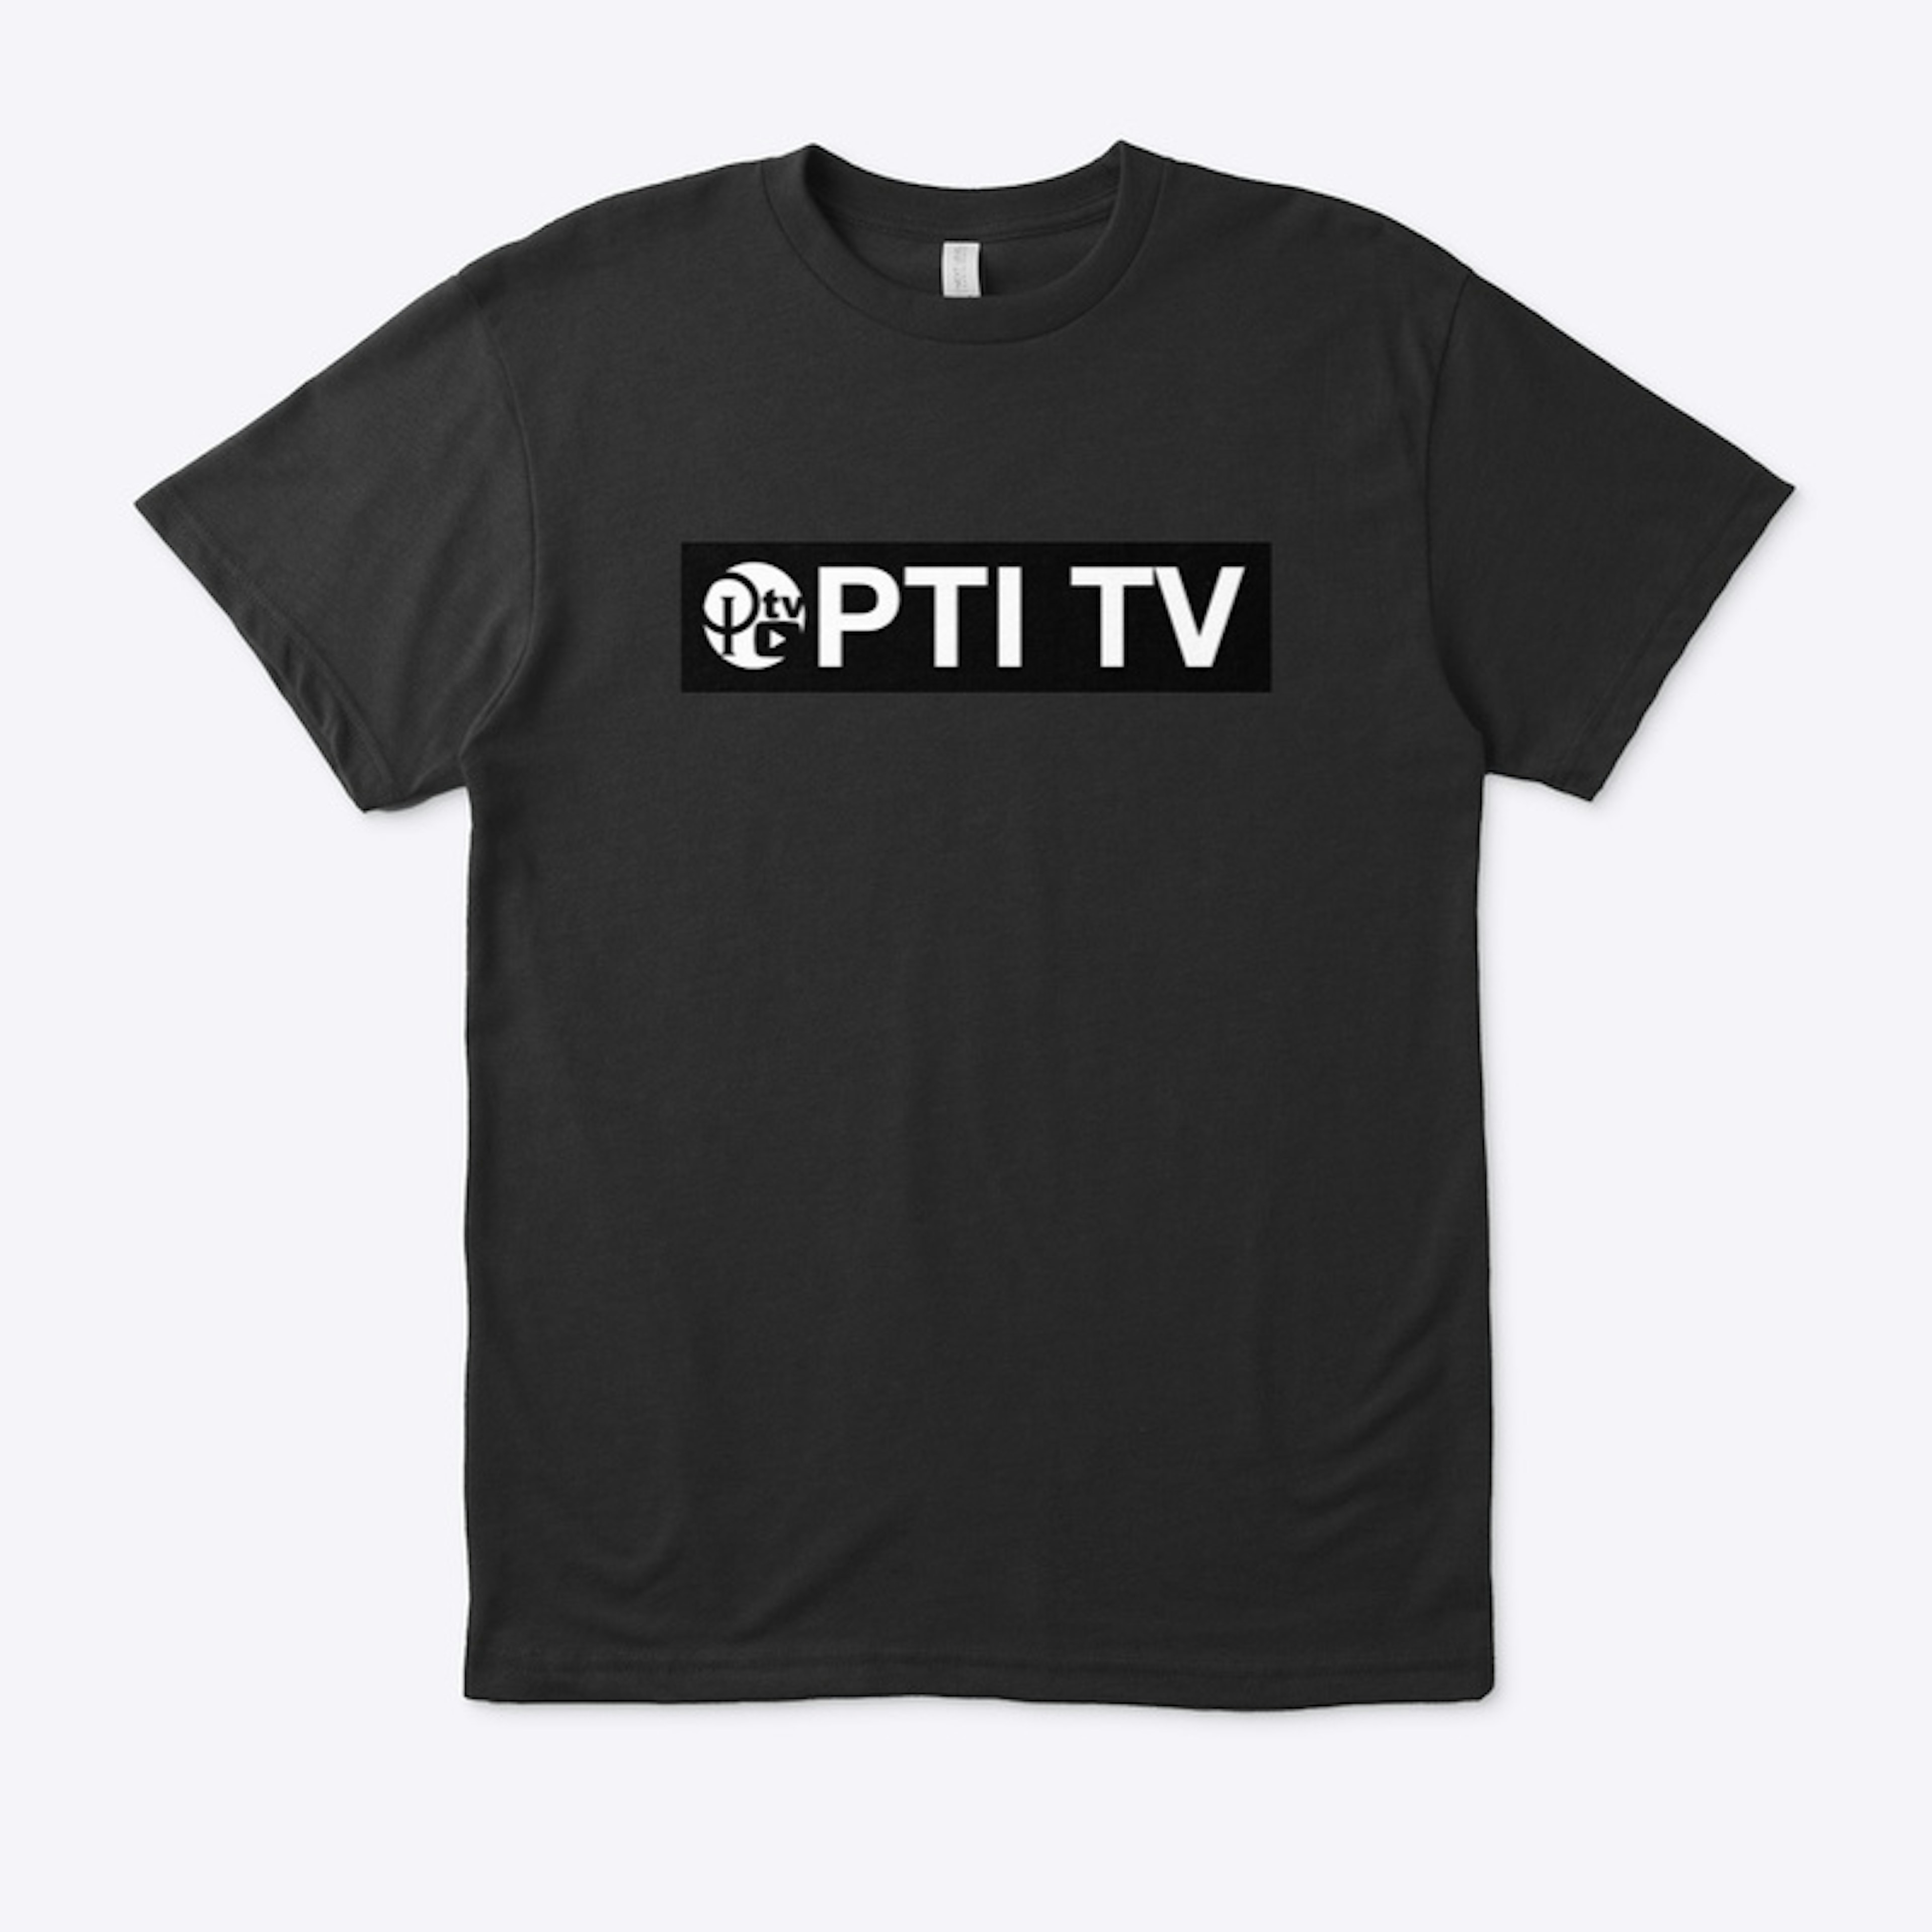 Opti TV Supporter Shirt